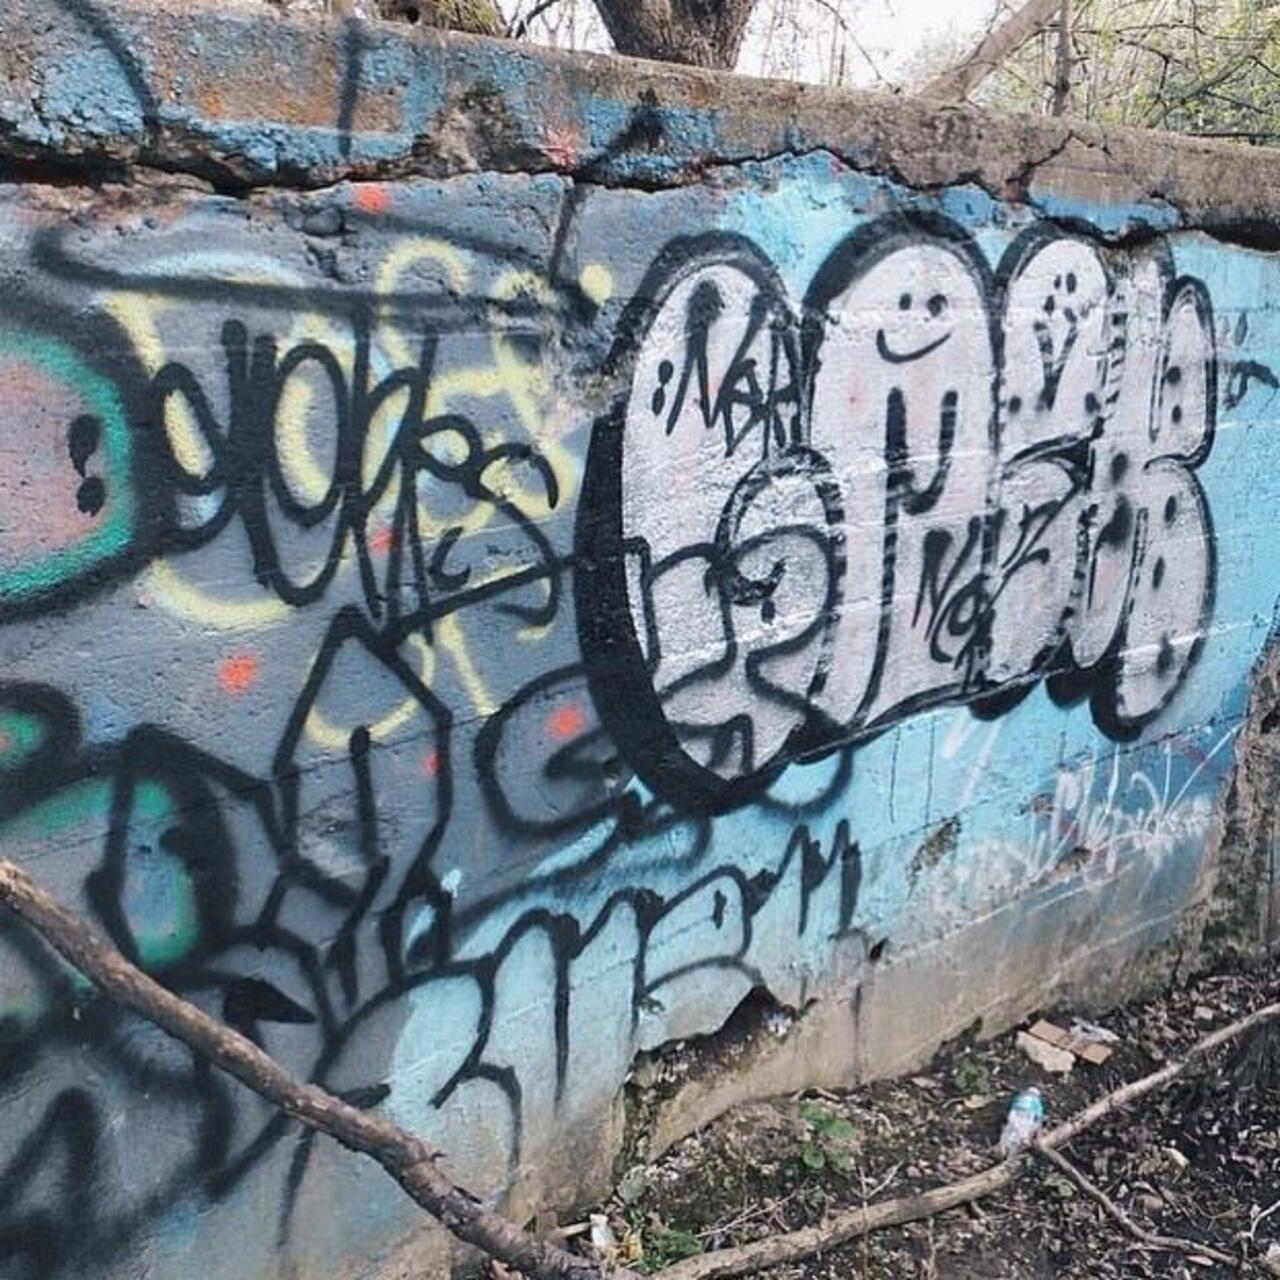 RT @artpushr: via #crossxed "http://ift.tt/1FDUv1Q" #graffiti #streetart http://t.co/7iOkErGhfy